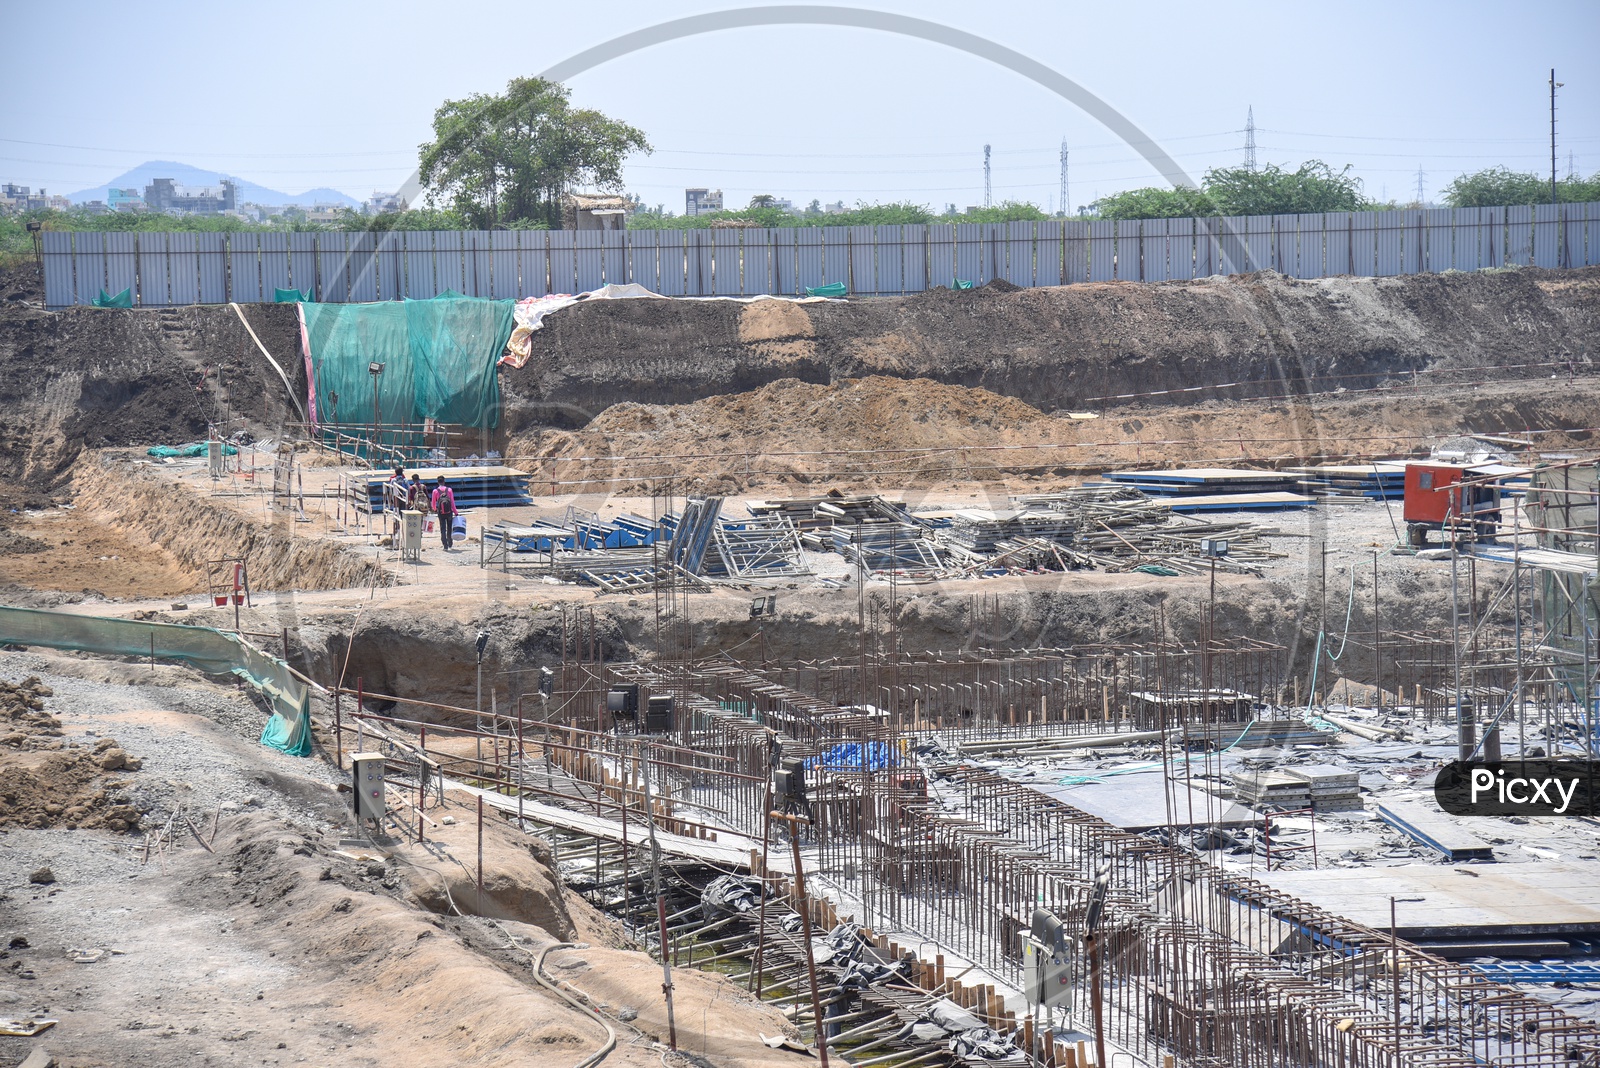 Basement Pillar Construction with Caste Iron Bars At a Construction Site